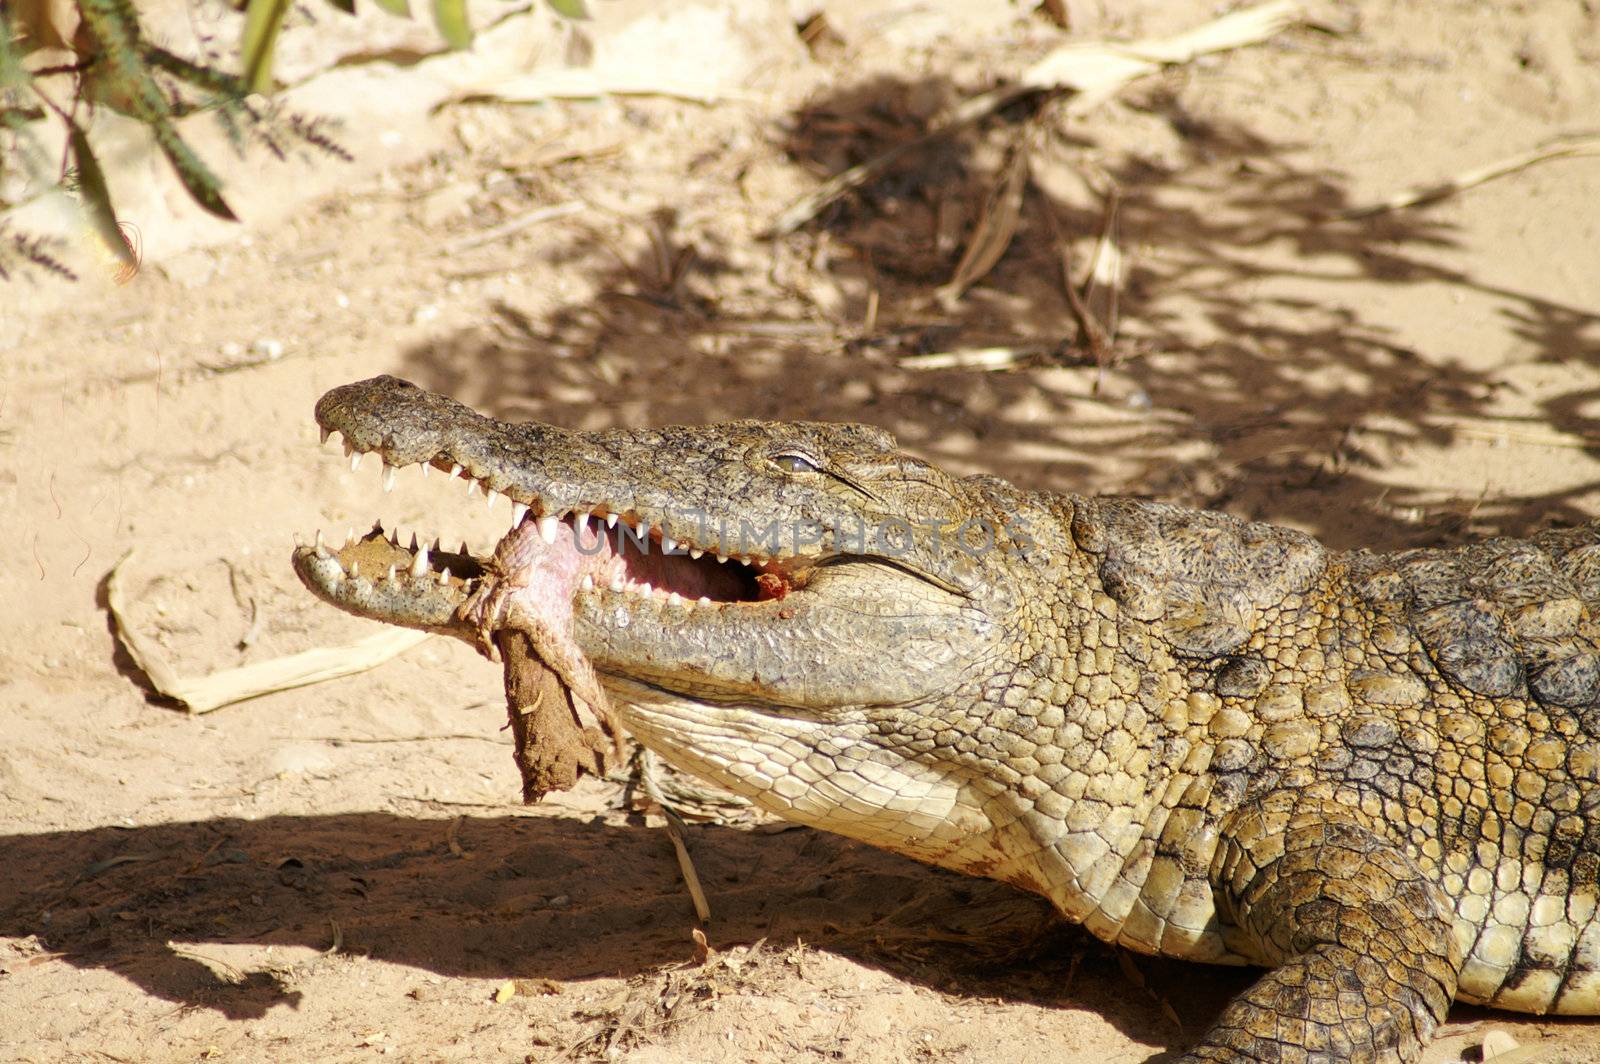 dangerous in large alligator eating